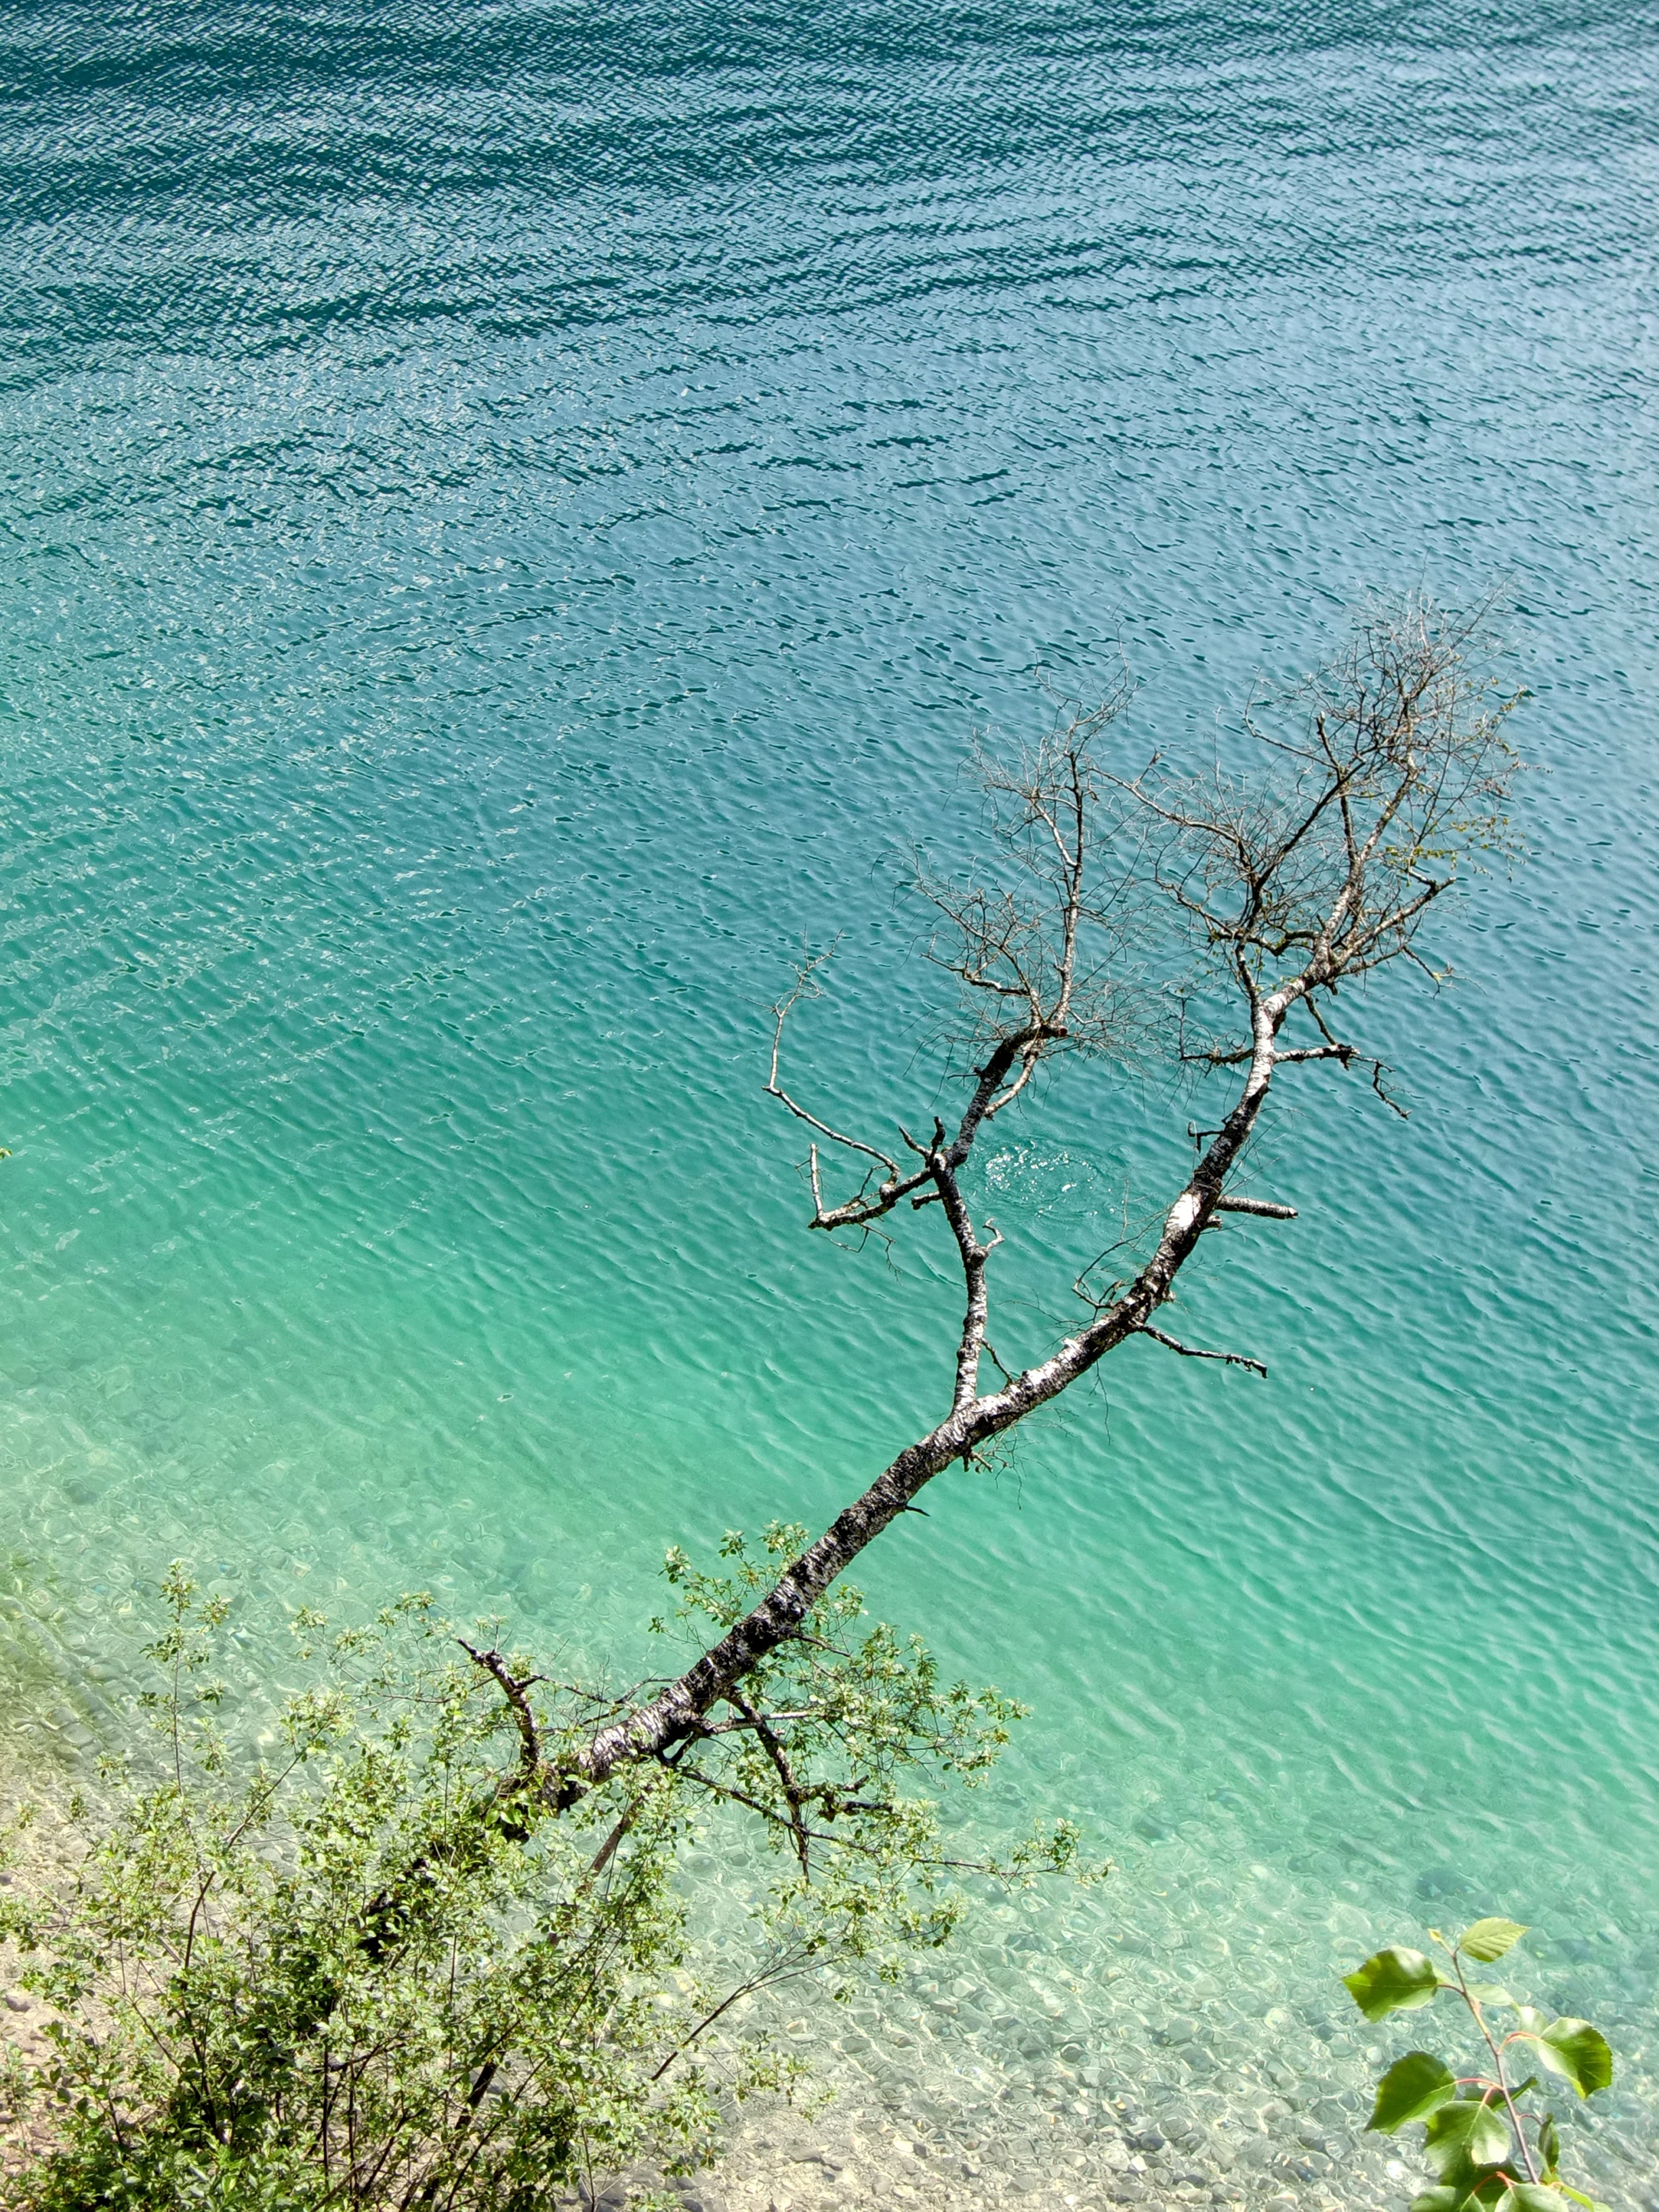 body of water near green trees